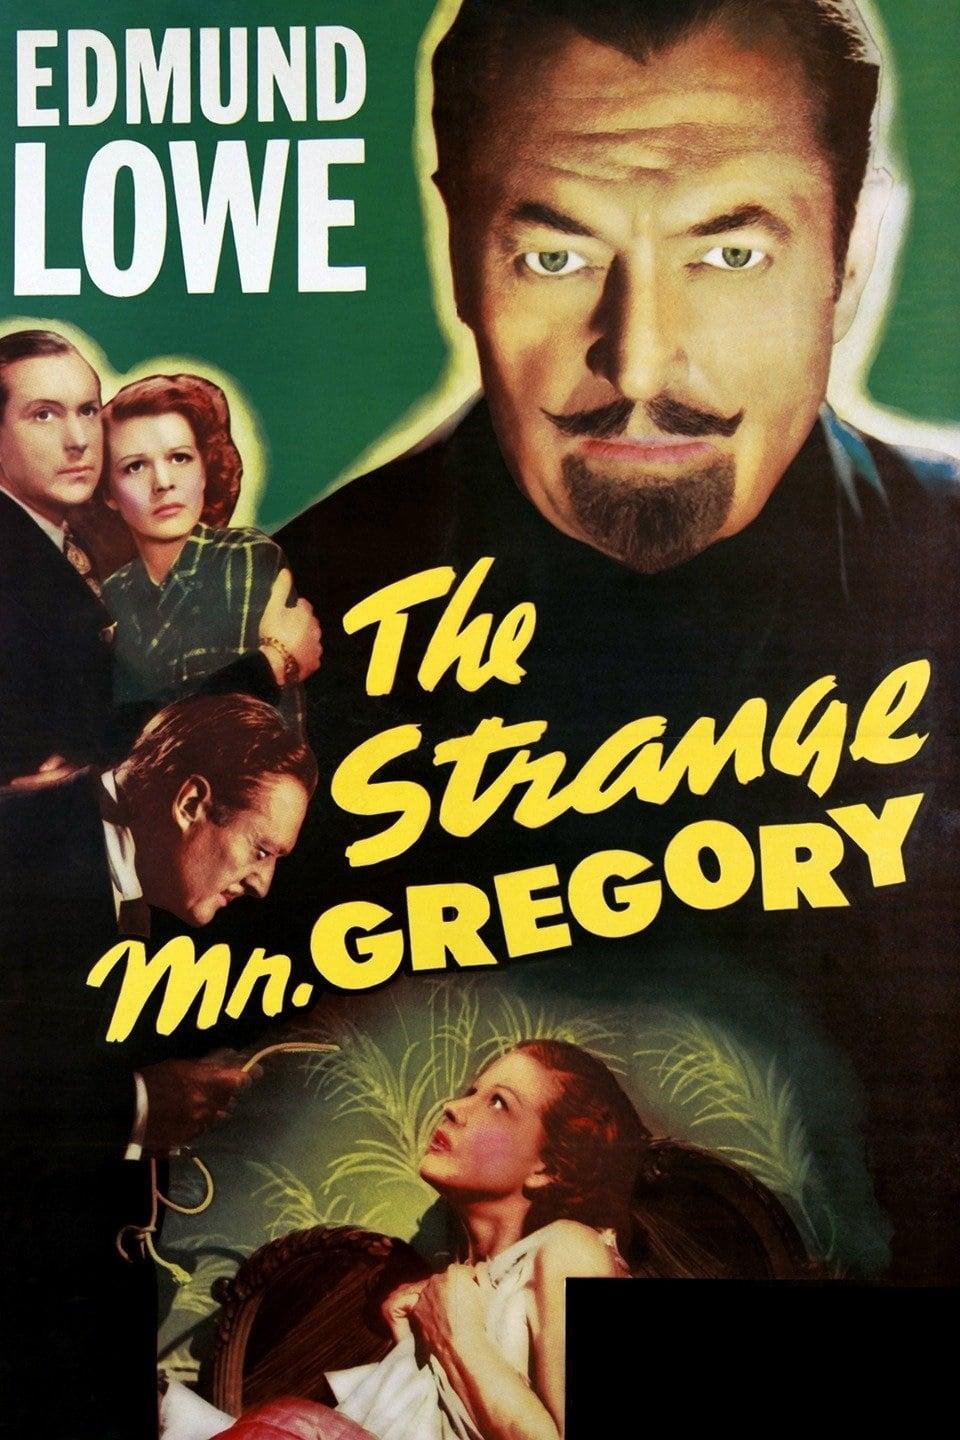 The Strange Mr. Gregory poster